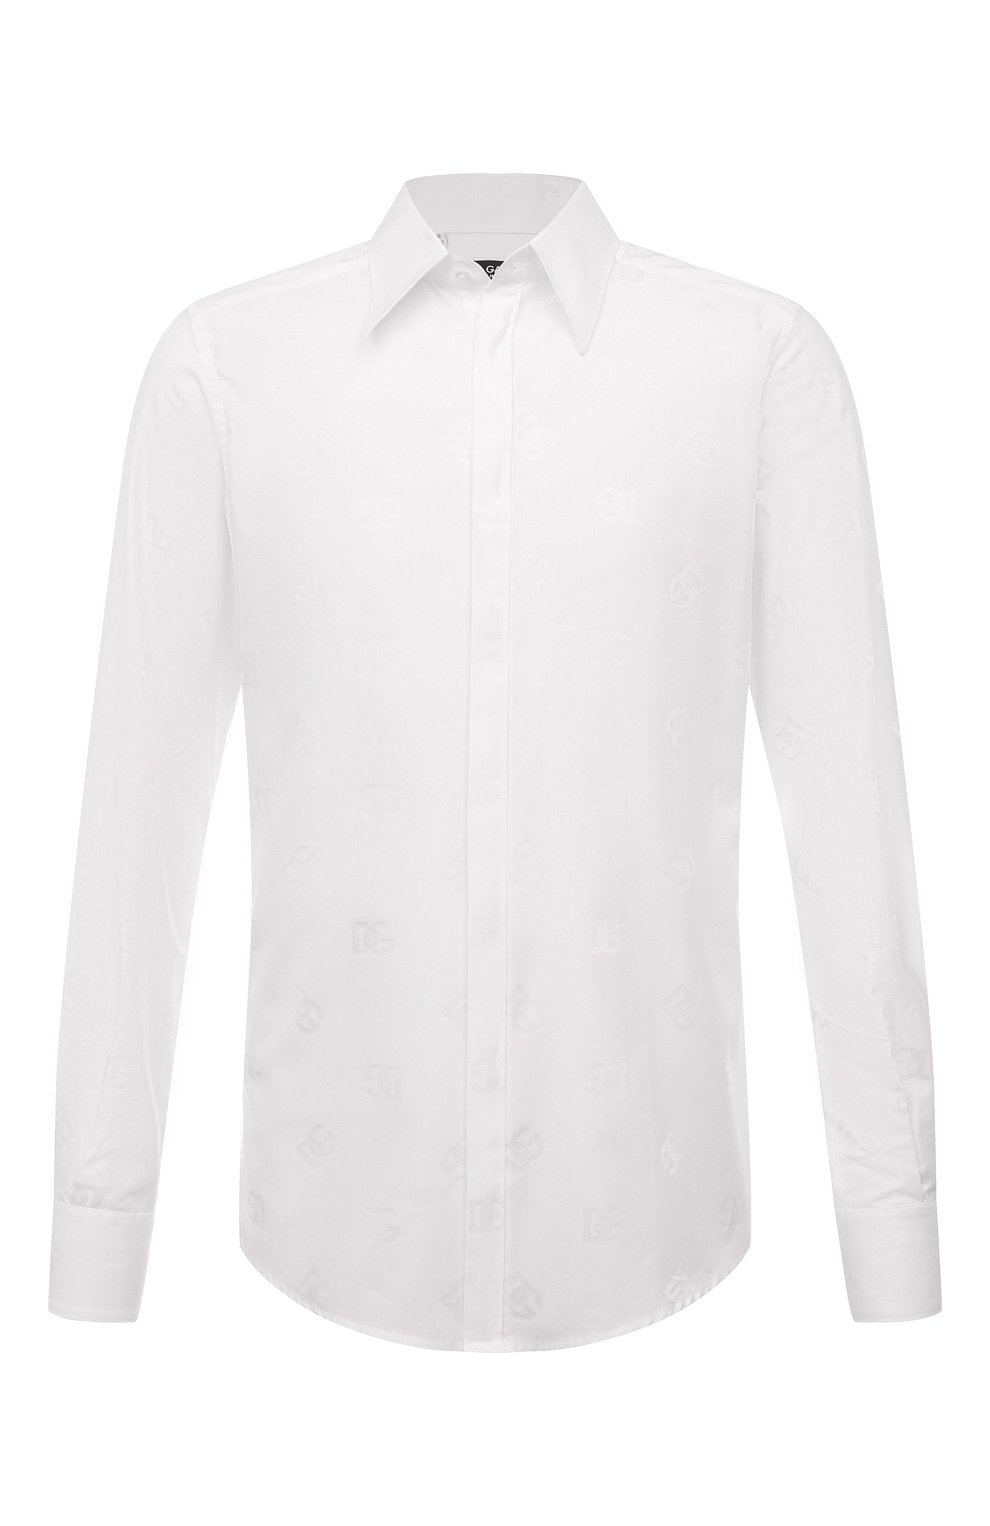 Рубашки Dolce & Gabbana, Хлопковая рубашка Dolce & Gabbana, Италия, Белый, Хлопок: 100%;, 13332501  - купить